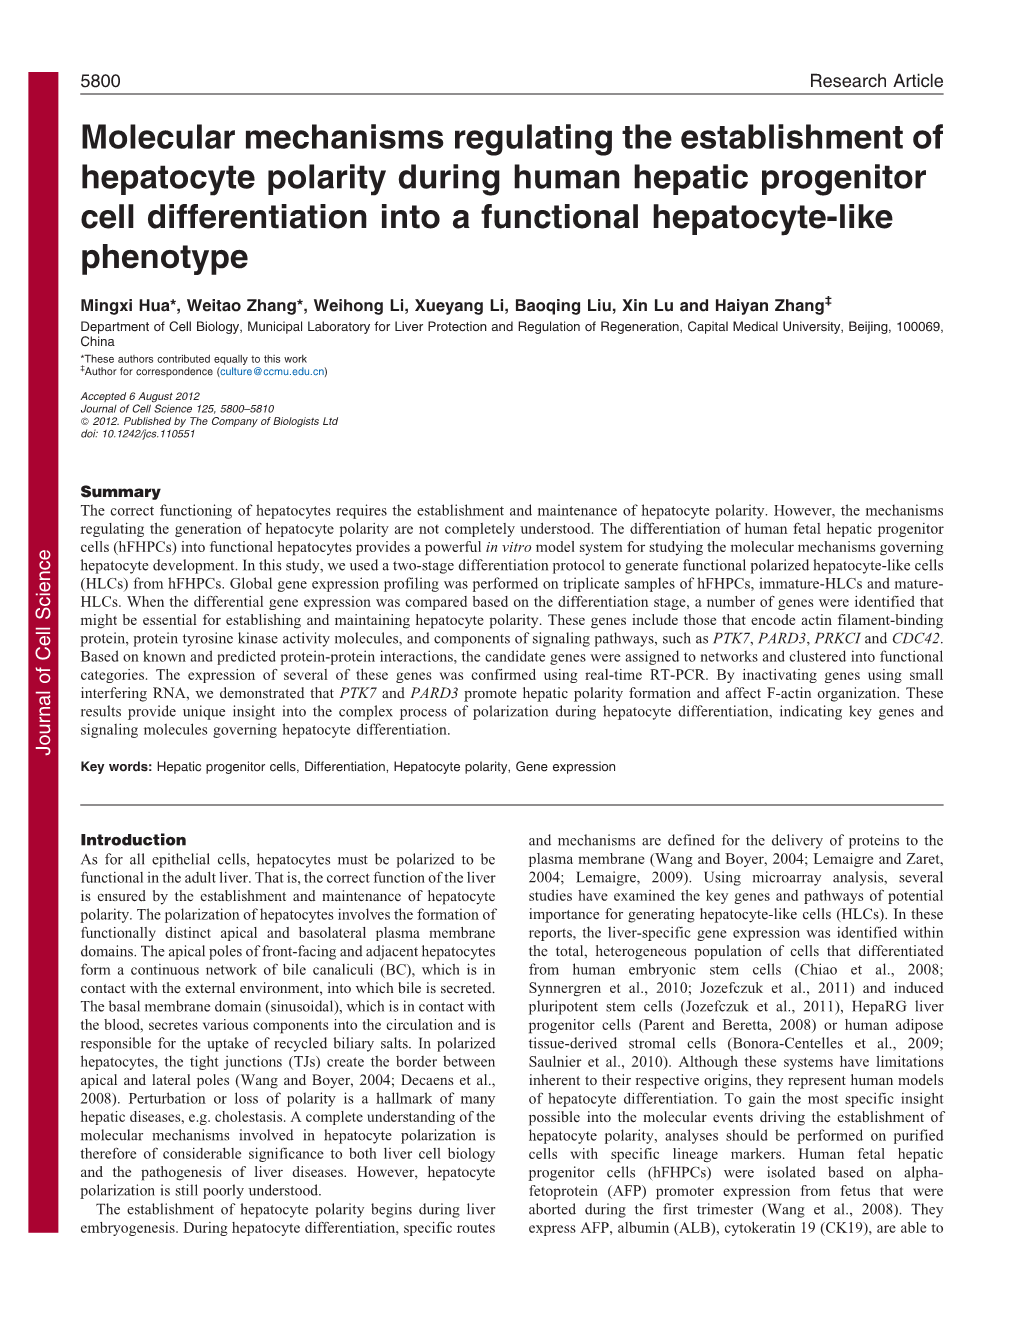 Molecular Mechanisms Regulating the Establishment of Hepatocyte Polarity